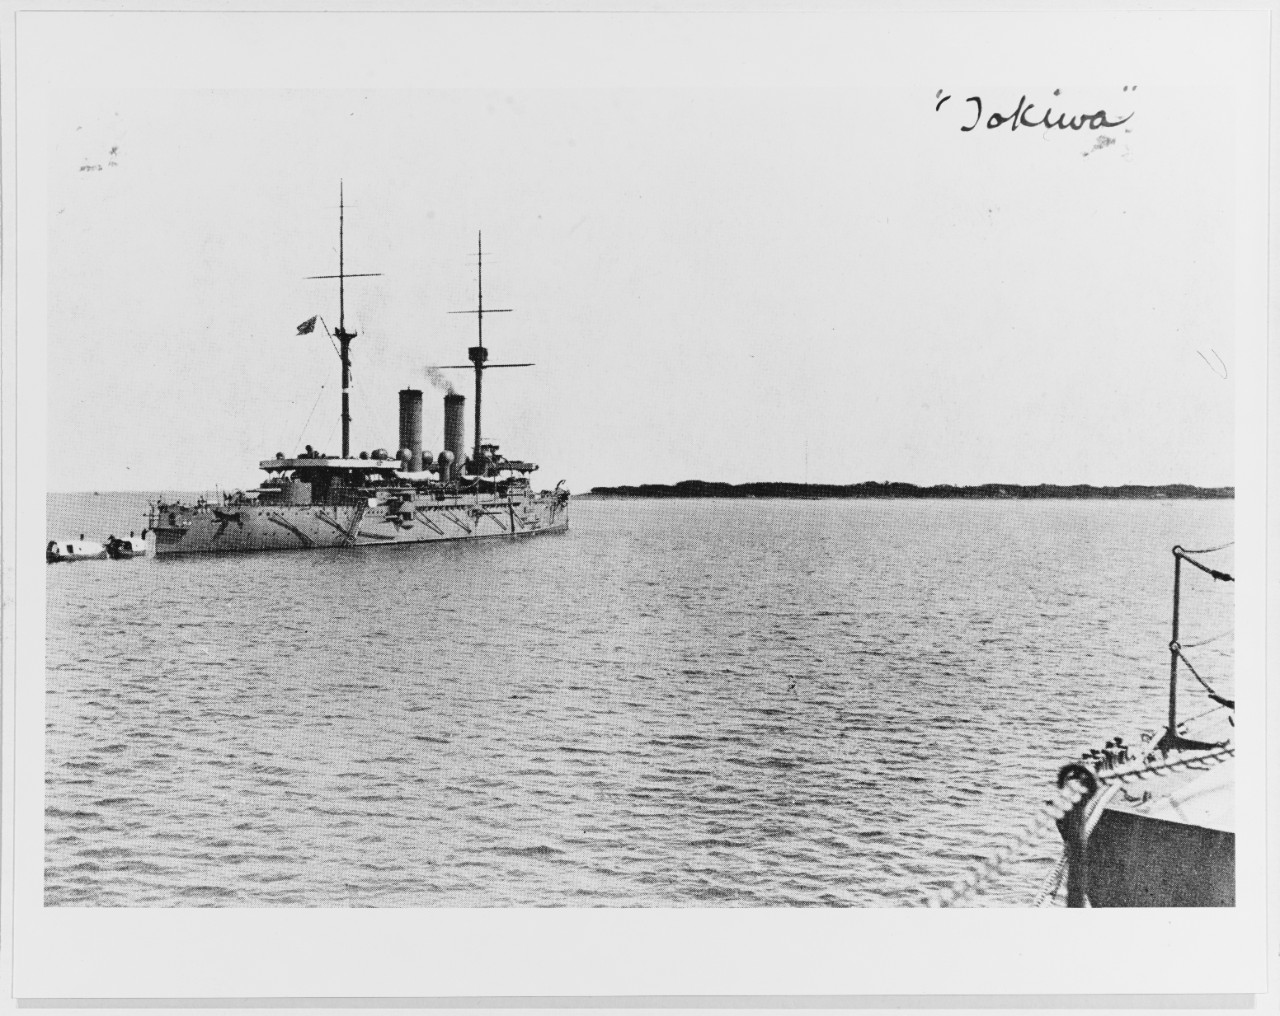 TOKIWA (Japanese armored cruiser, 1898)